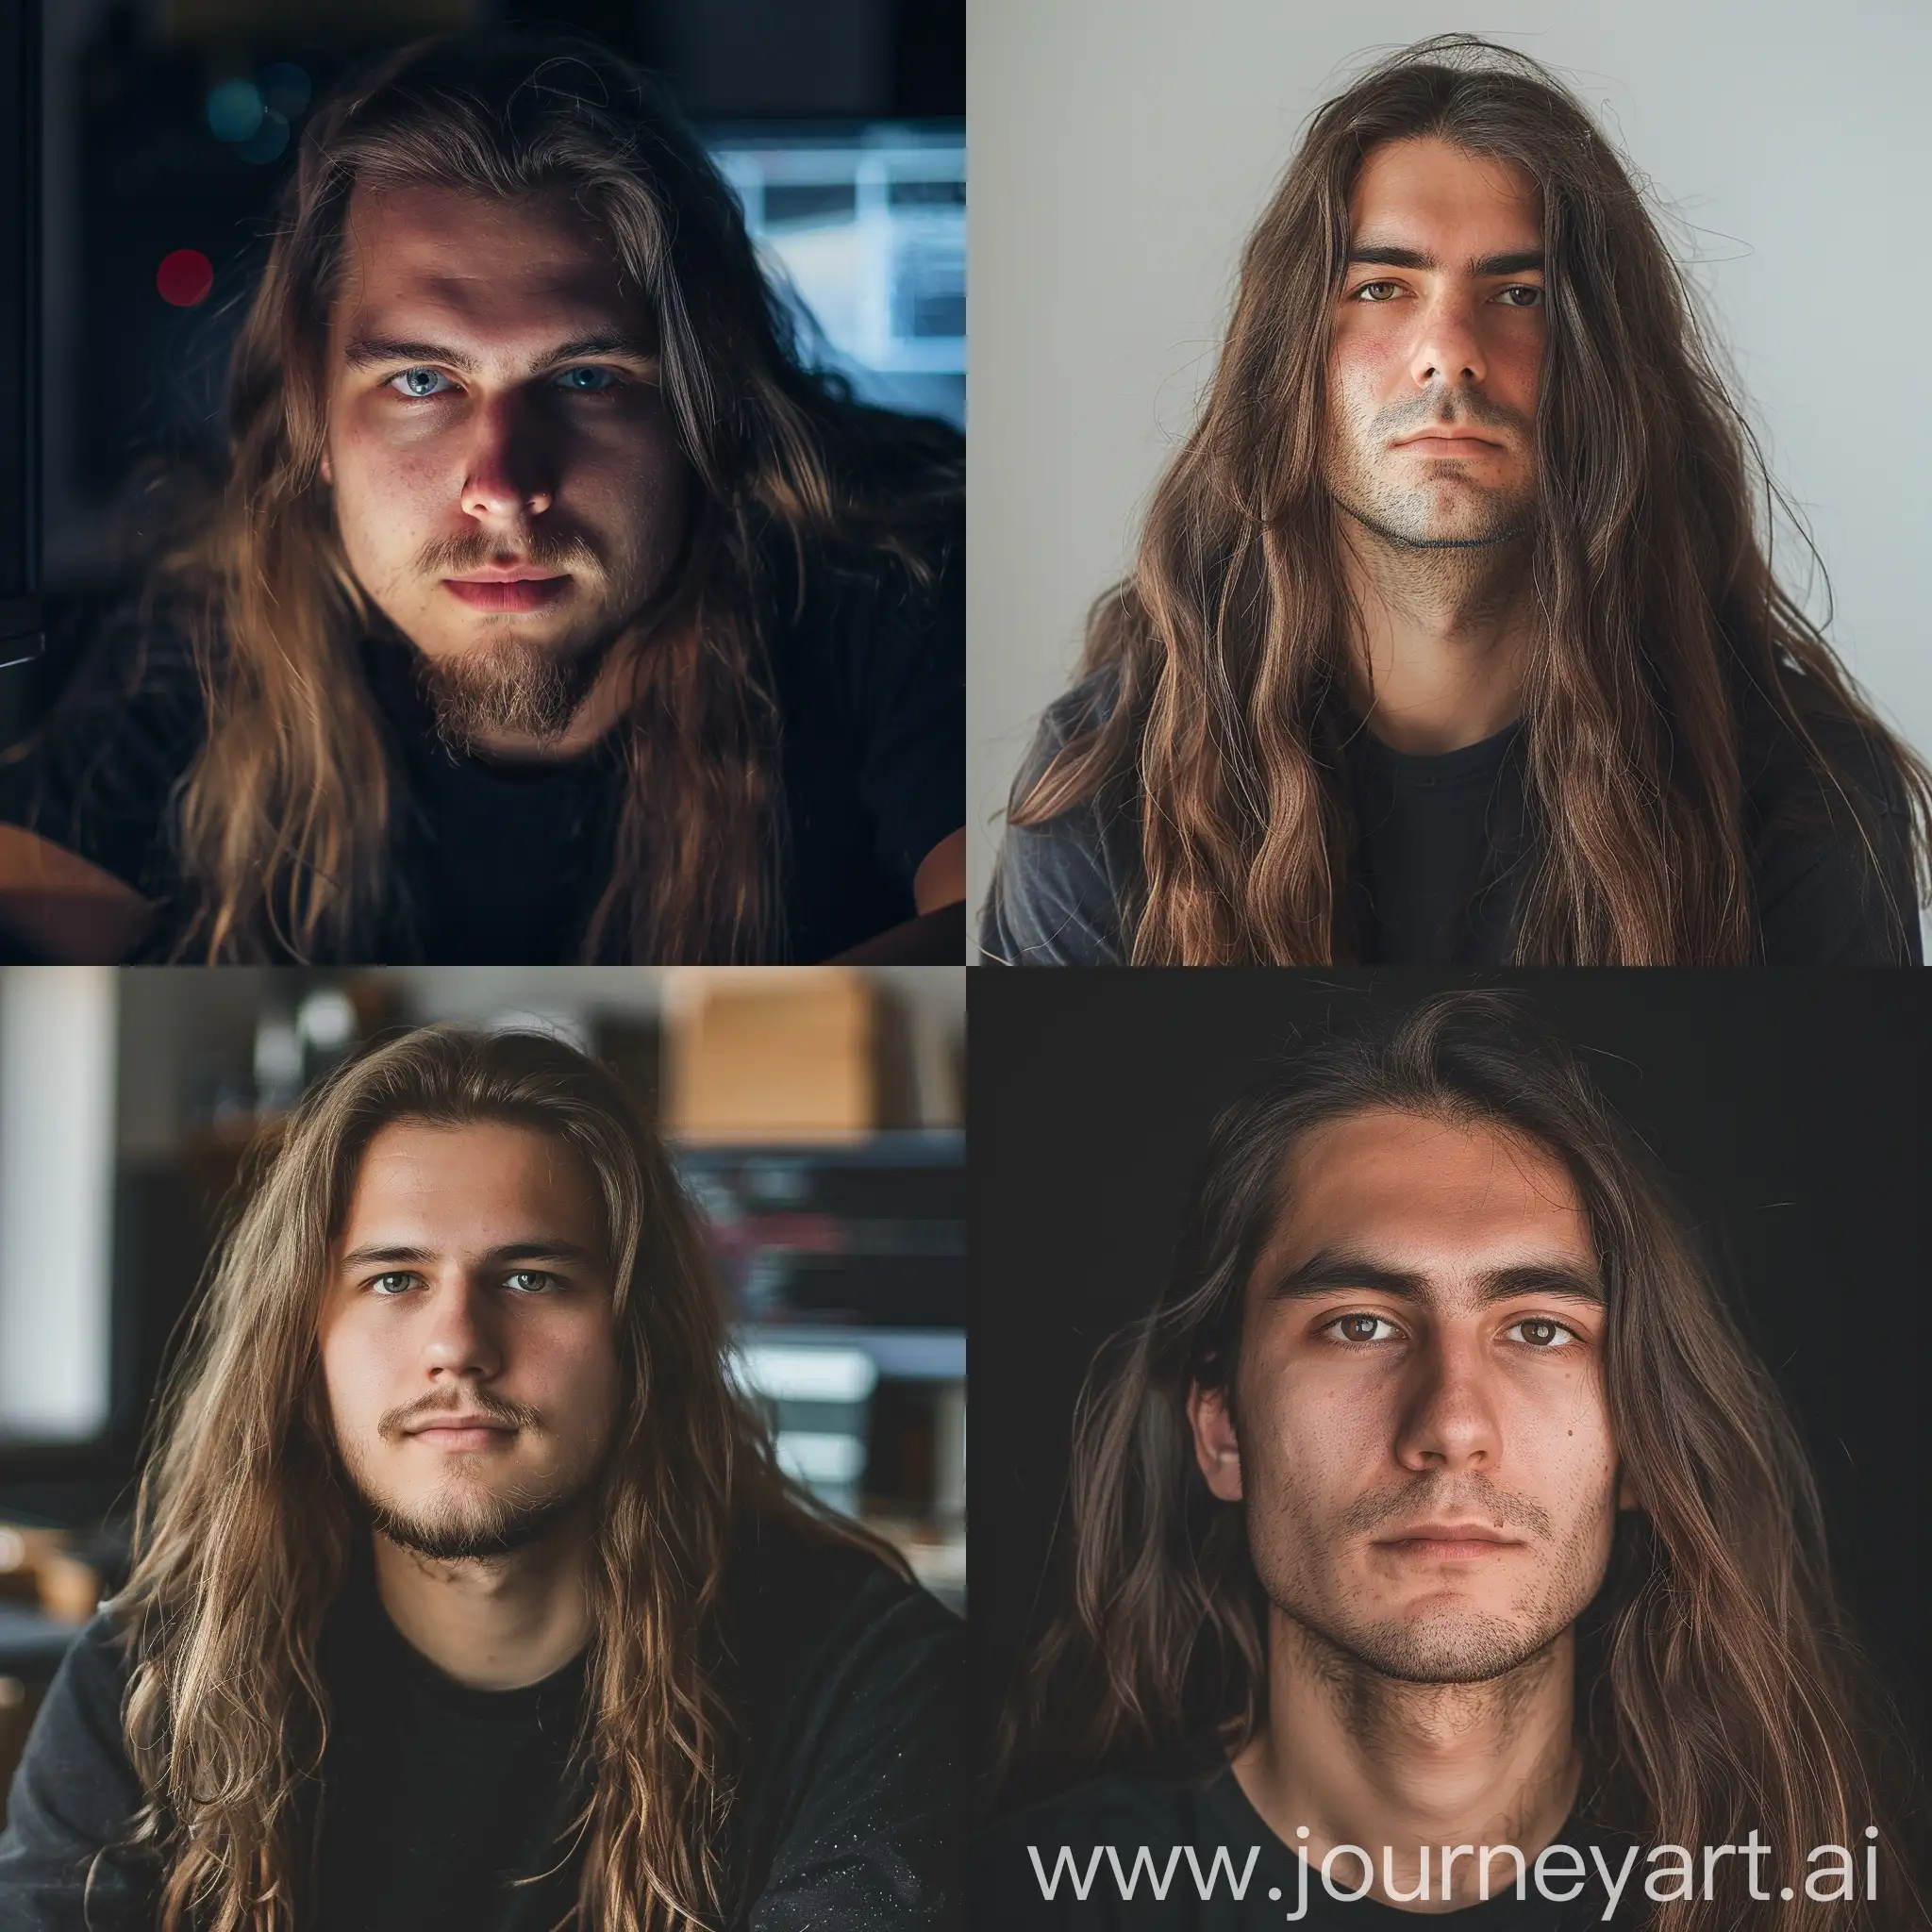 Slavic-Man-Programmer-with-Long-Hair-in-Digital-Environment